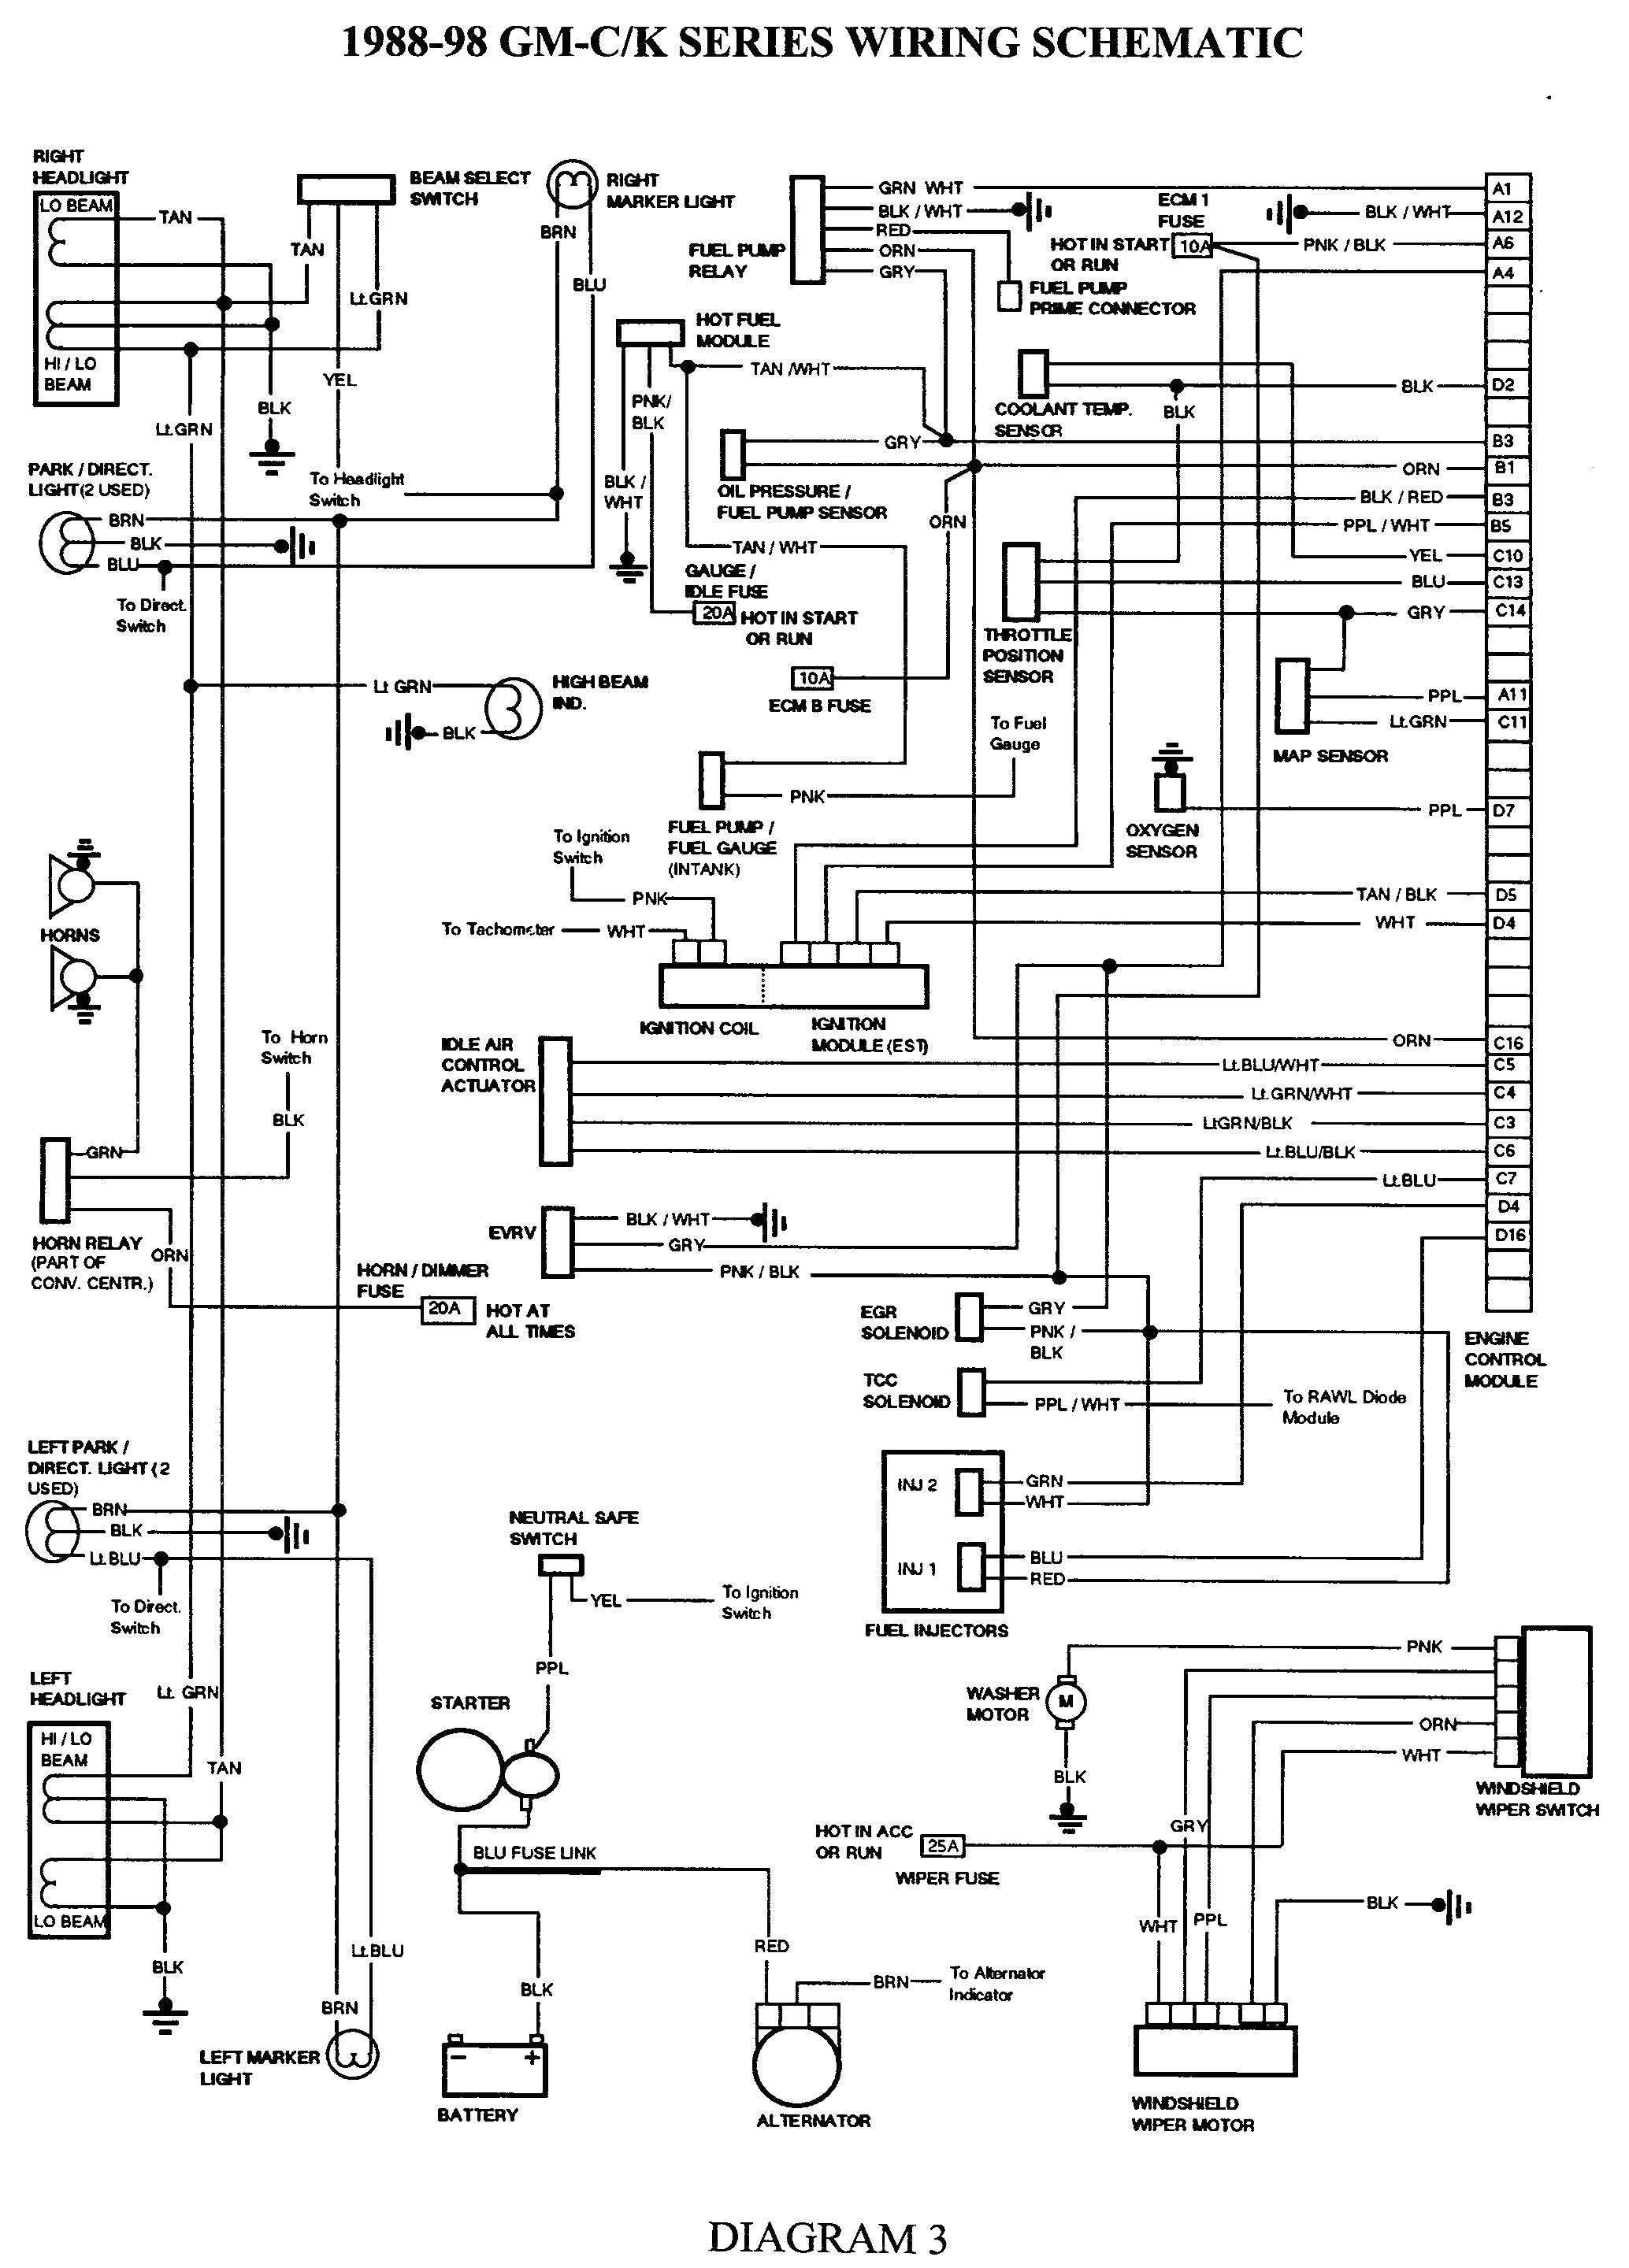 1998 chevy s10 2 2 engine diagram 98 gmc sierra headlight wiring diagram circuit diagrams image of 1998 chevy s10 2 2 engine diagram for 1999 suburban wiring diagram jpg